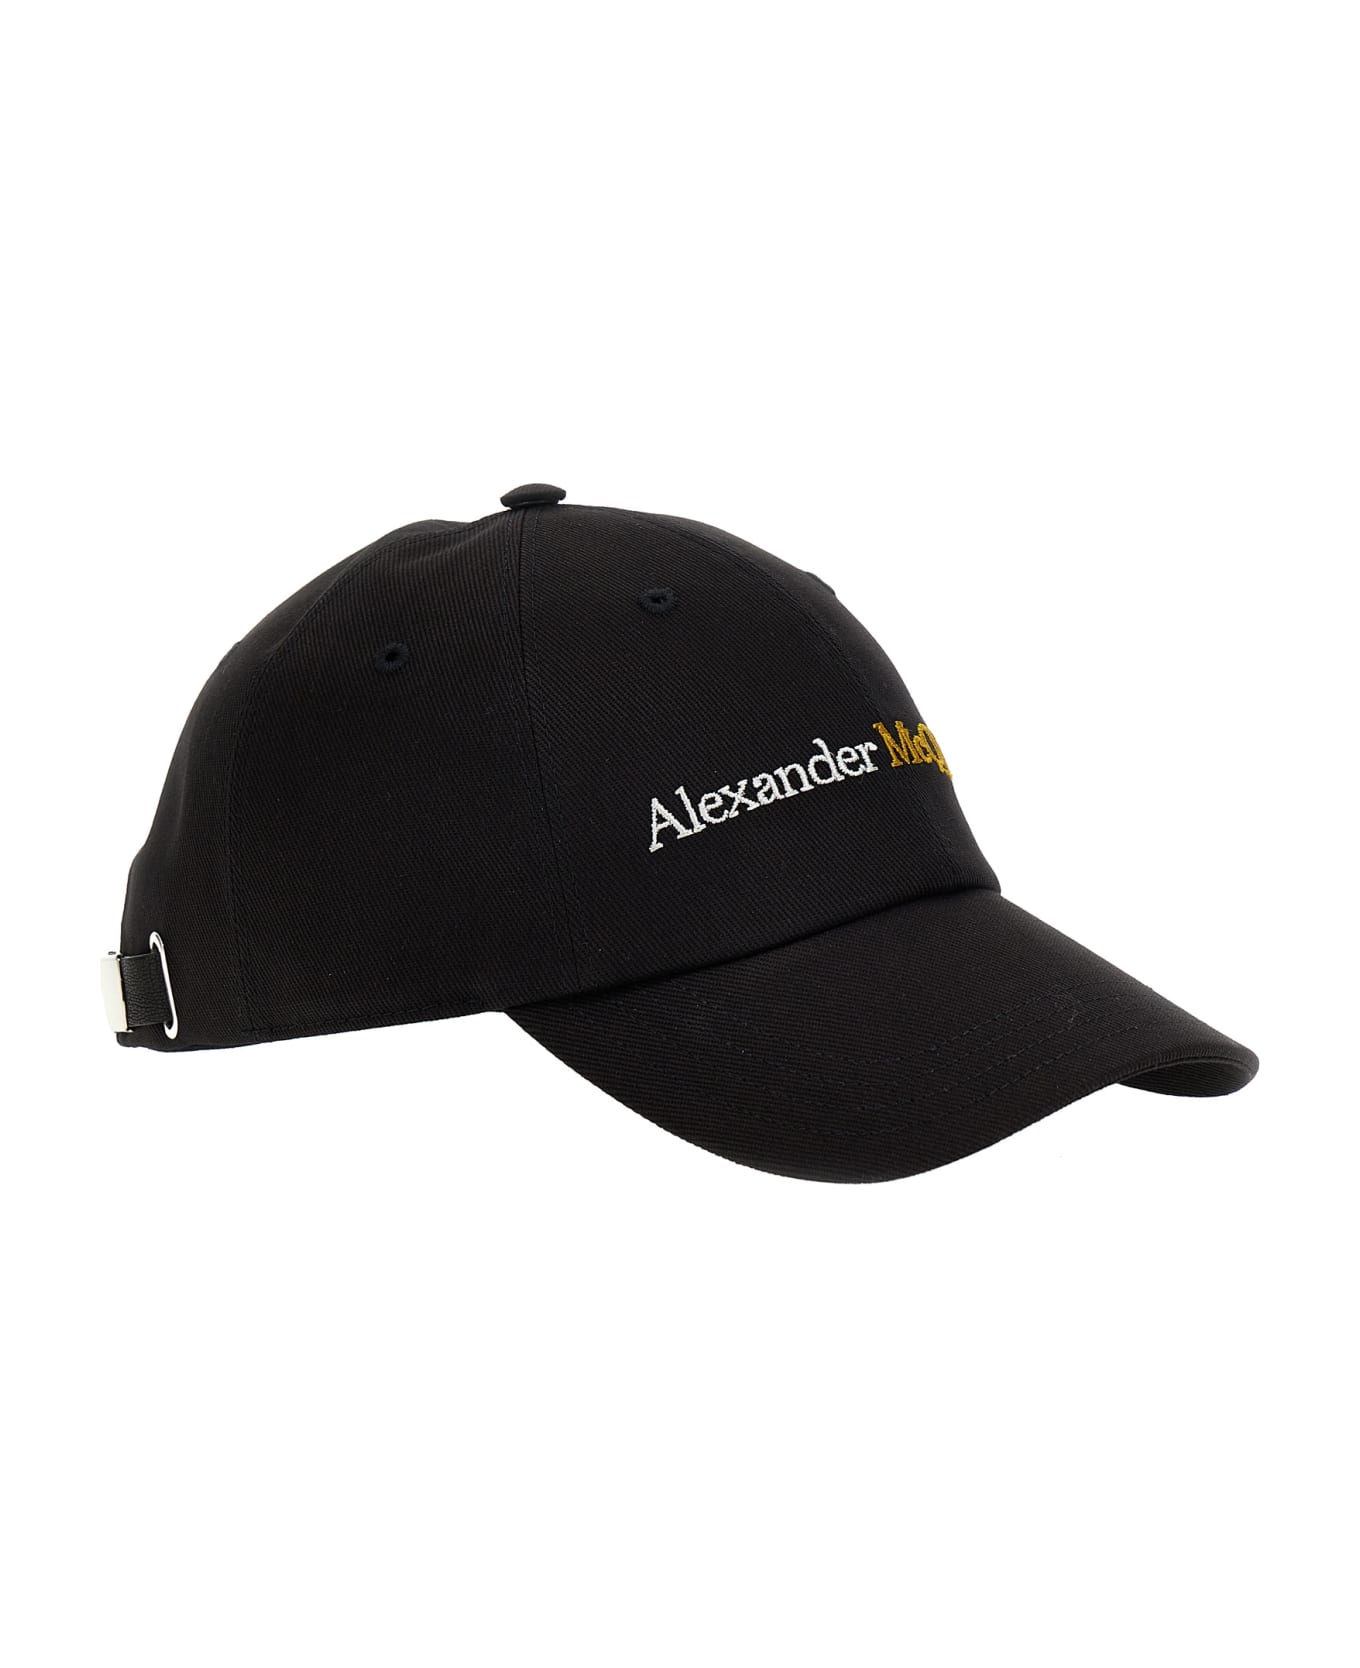 Alexander McQueen Logo Cap - Black  